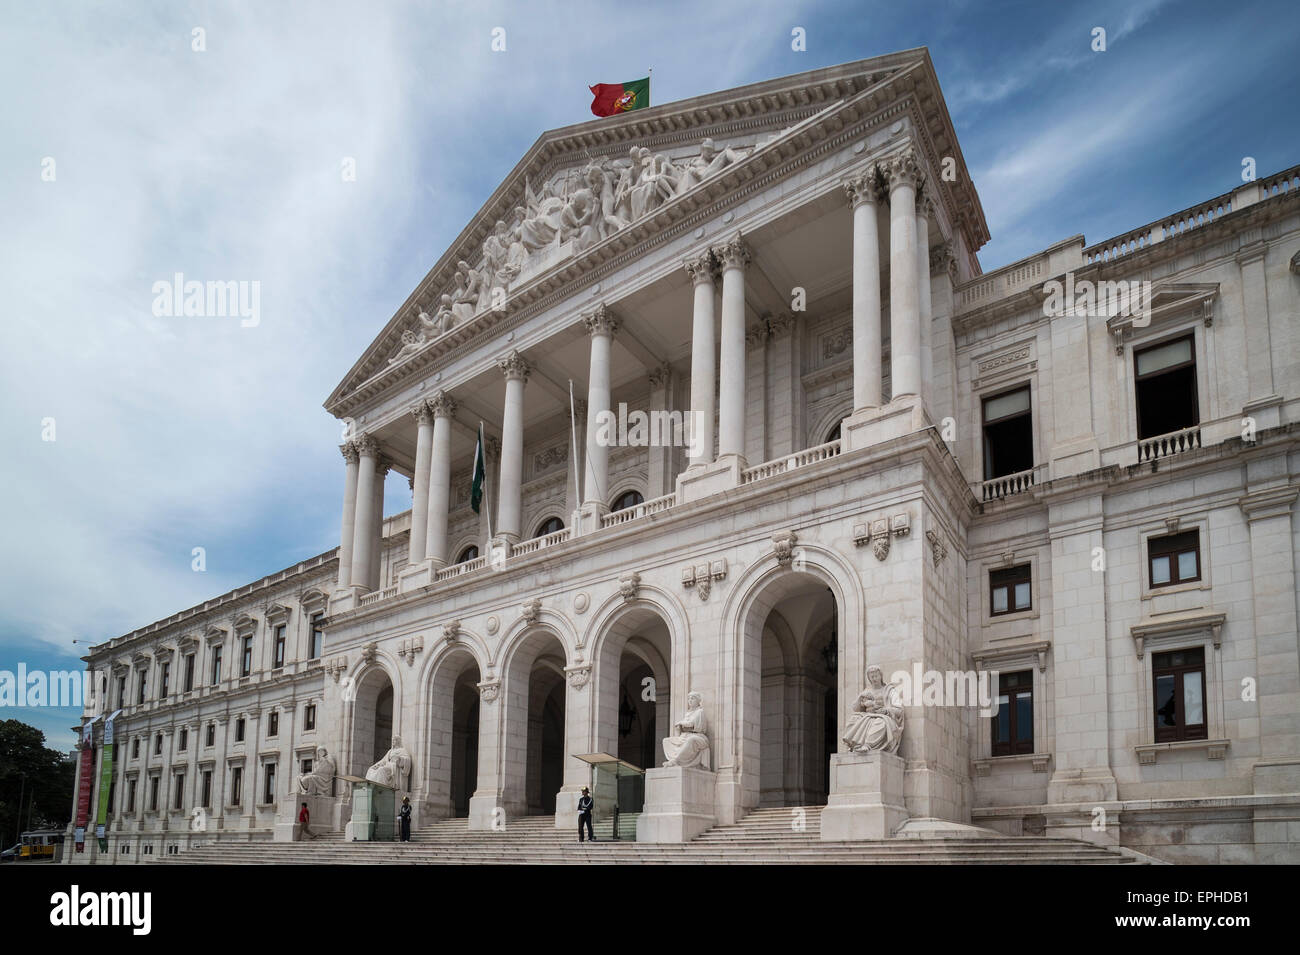 The Palácio de São Bento, 'Saint Benedict's Palace', is the home of the Assembly of the Republic, the Portuguese parliament. Lis Stock Photo